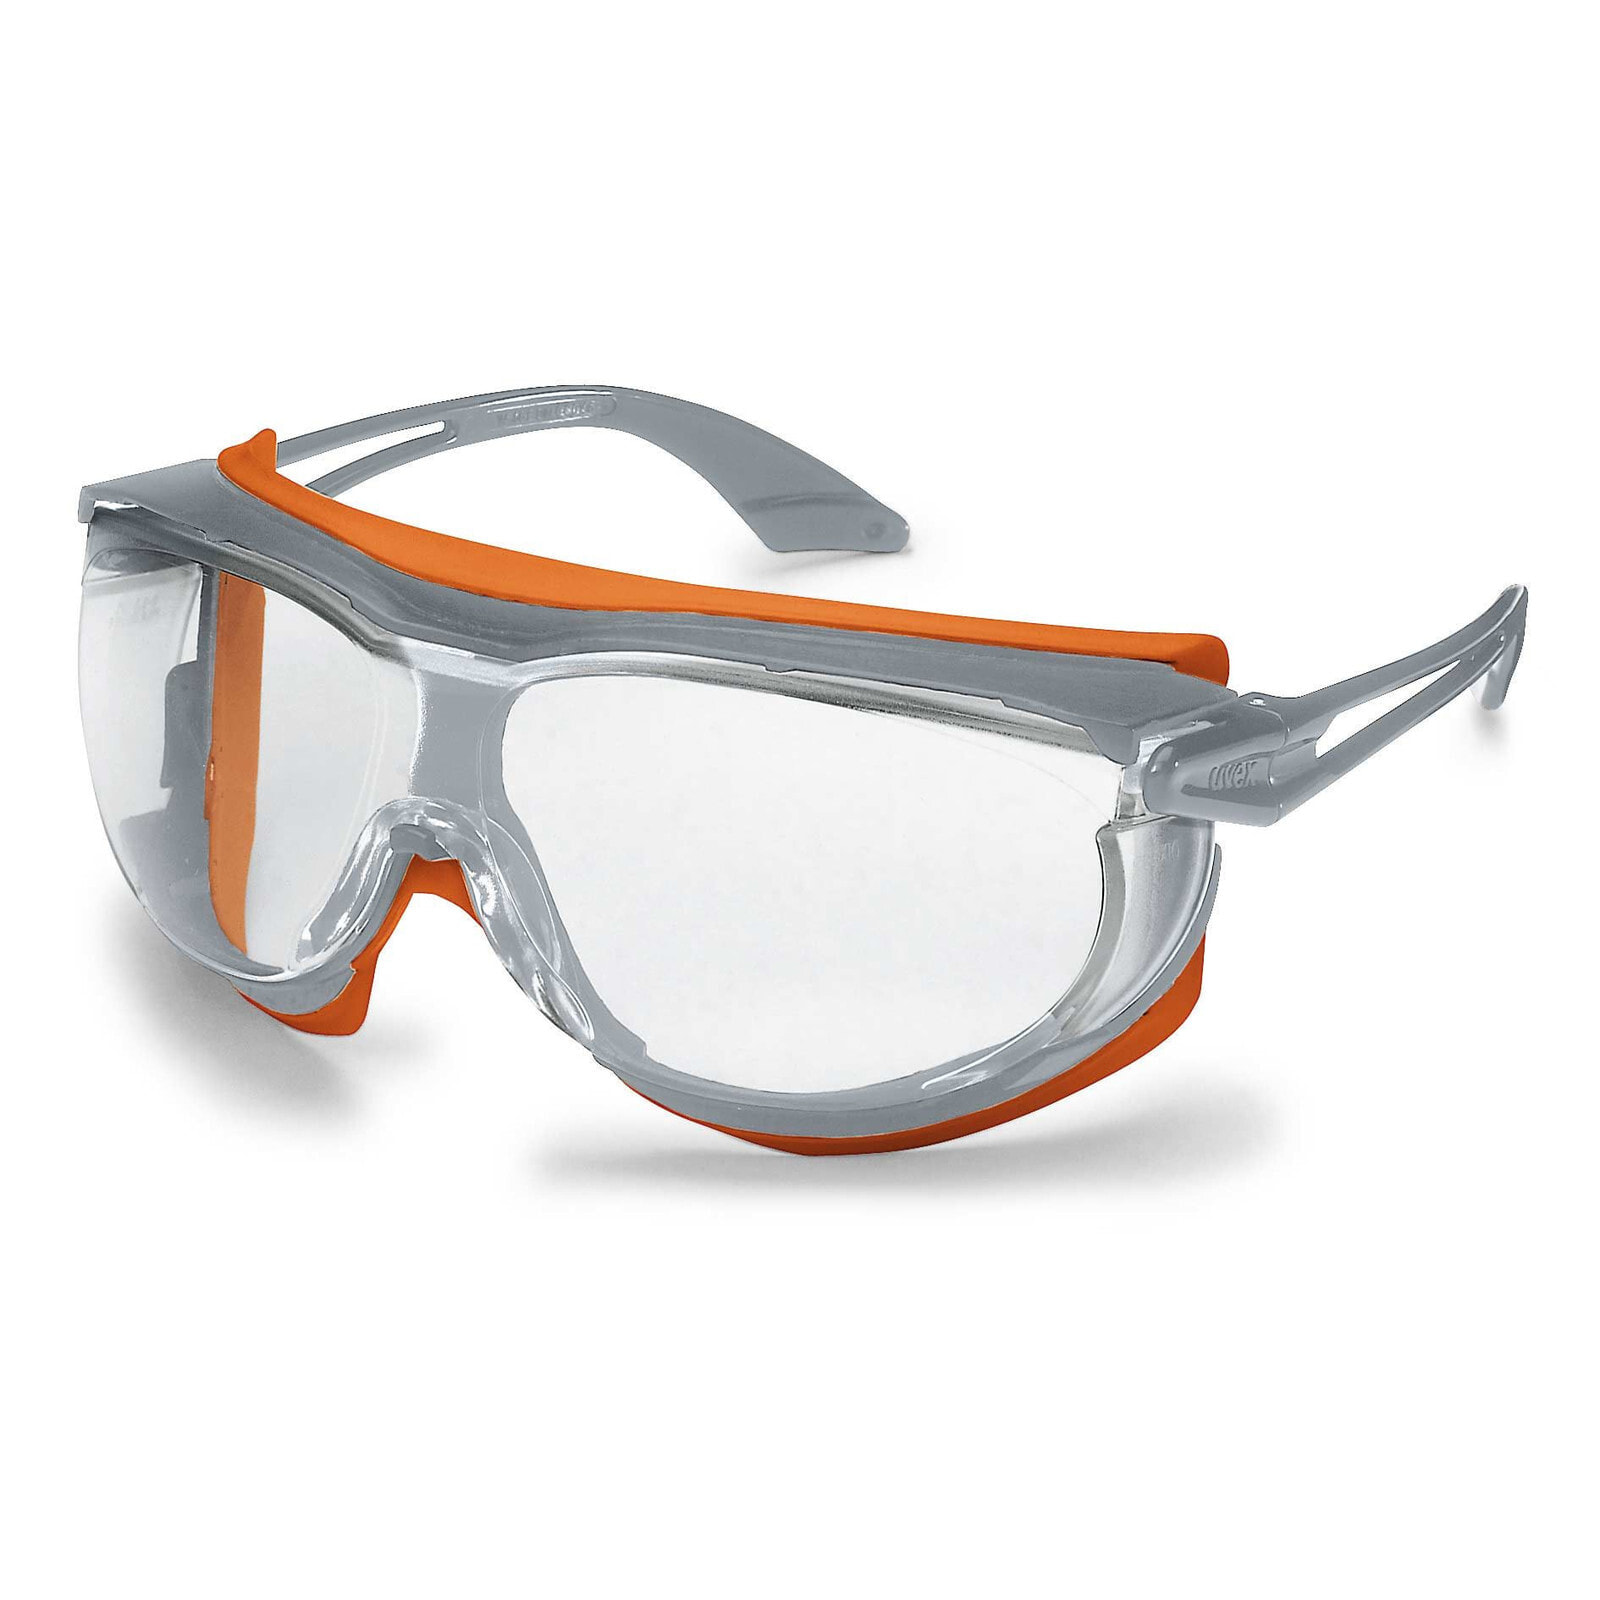 UVEX Arbeitsschutz 9175275 - Safety glasses - Grey - Orange - Polycarbonate - 1 pc(s)